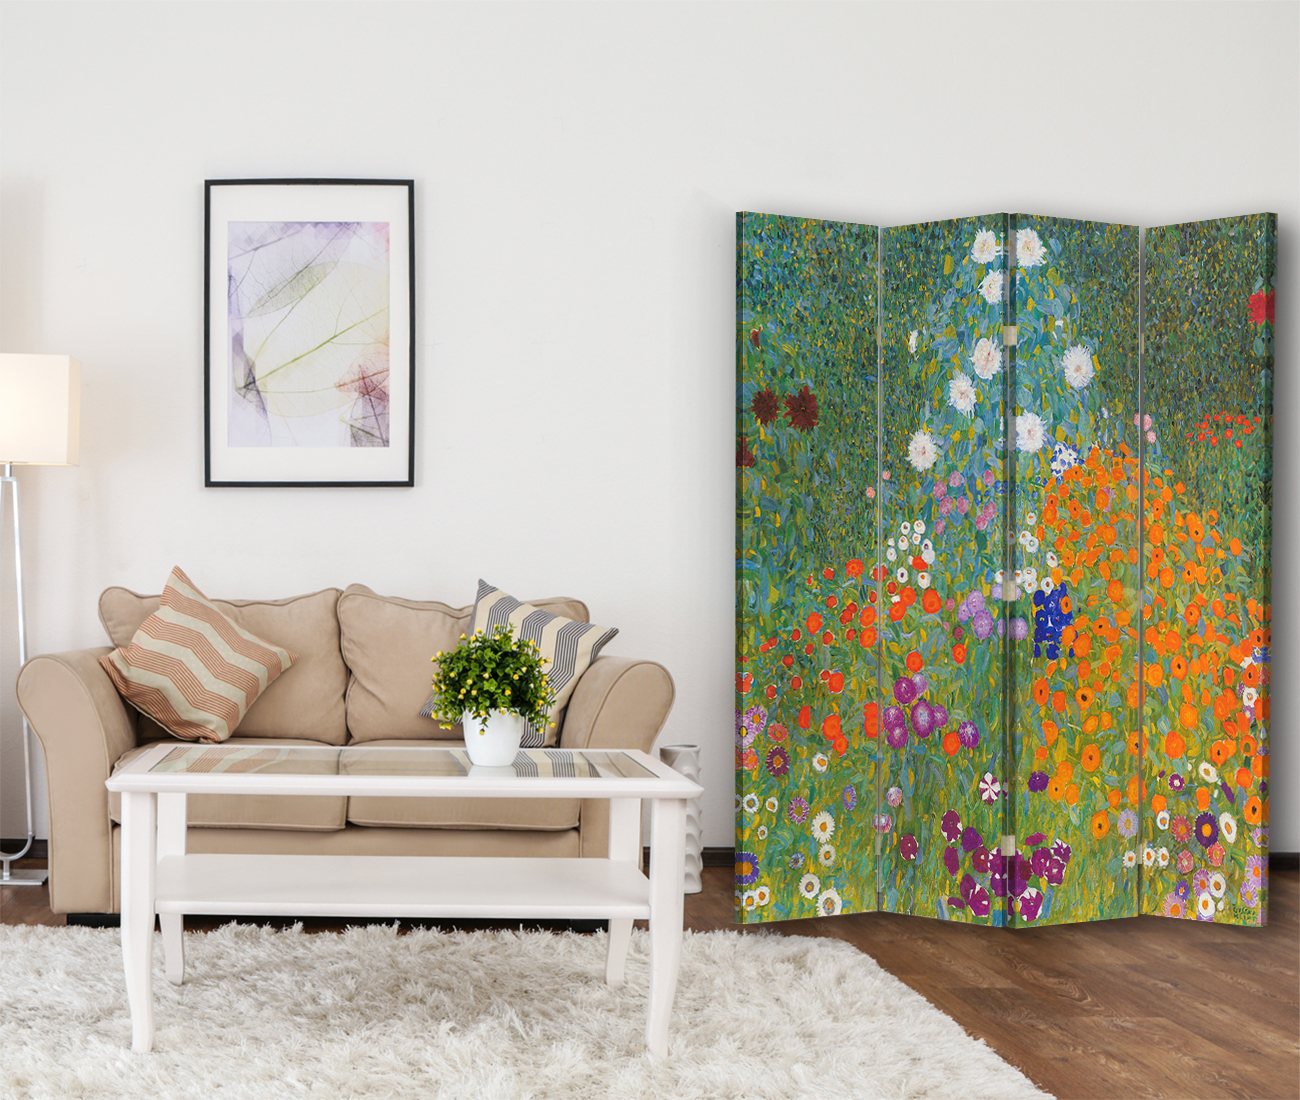 Paravento - Separè per Interni Giardino Fiorito - Gustav Klimt